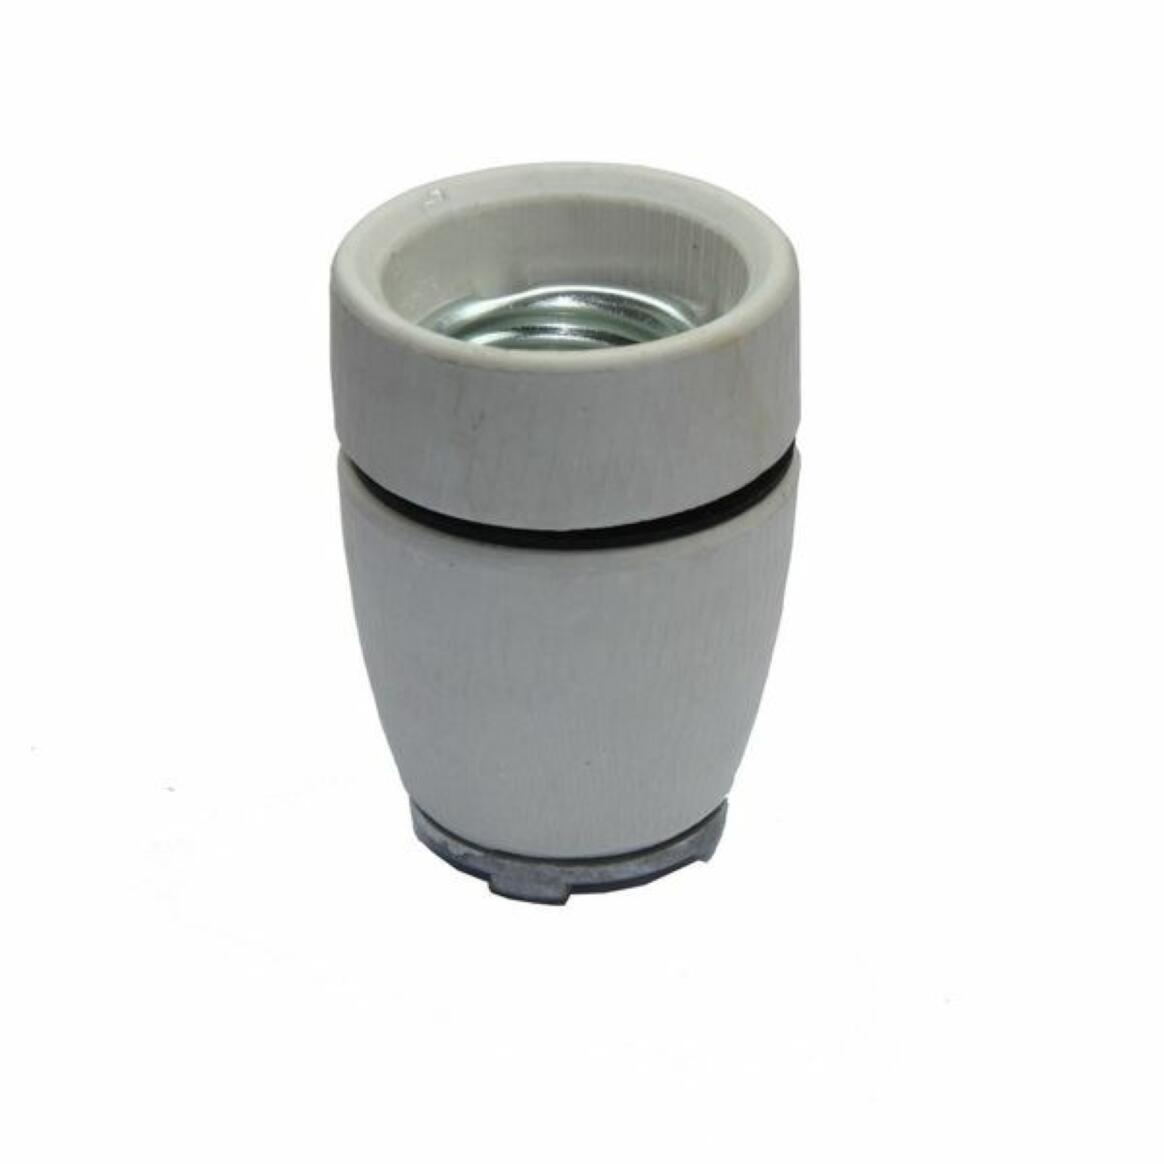 E27 ceramic / porcelain lamp holder main product image